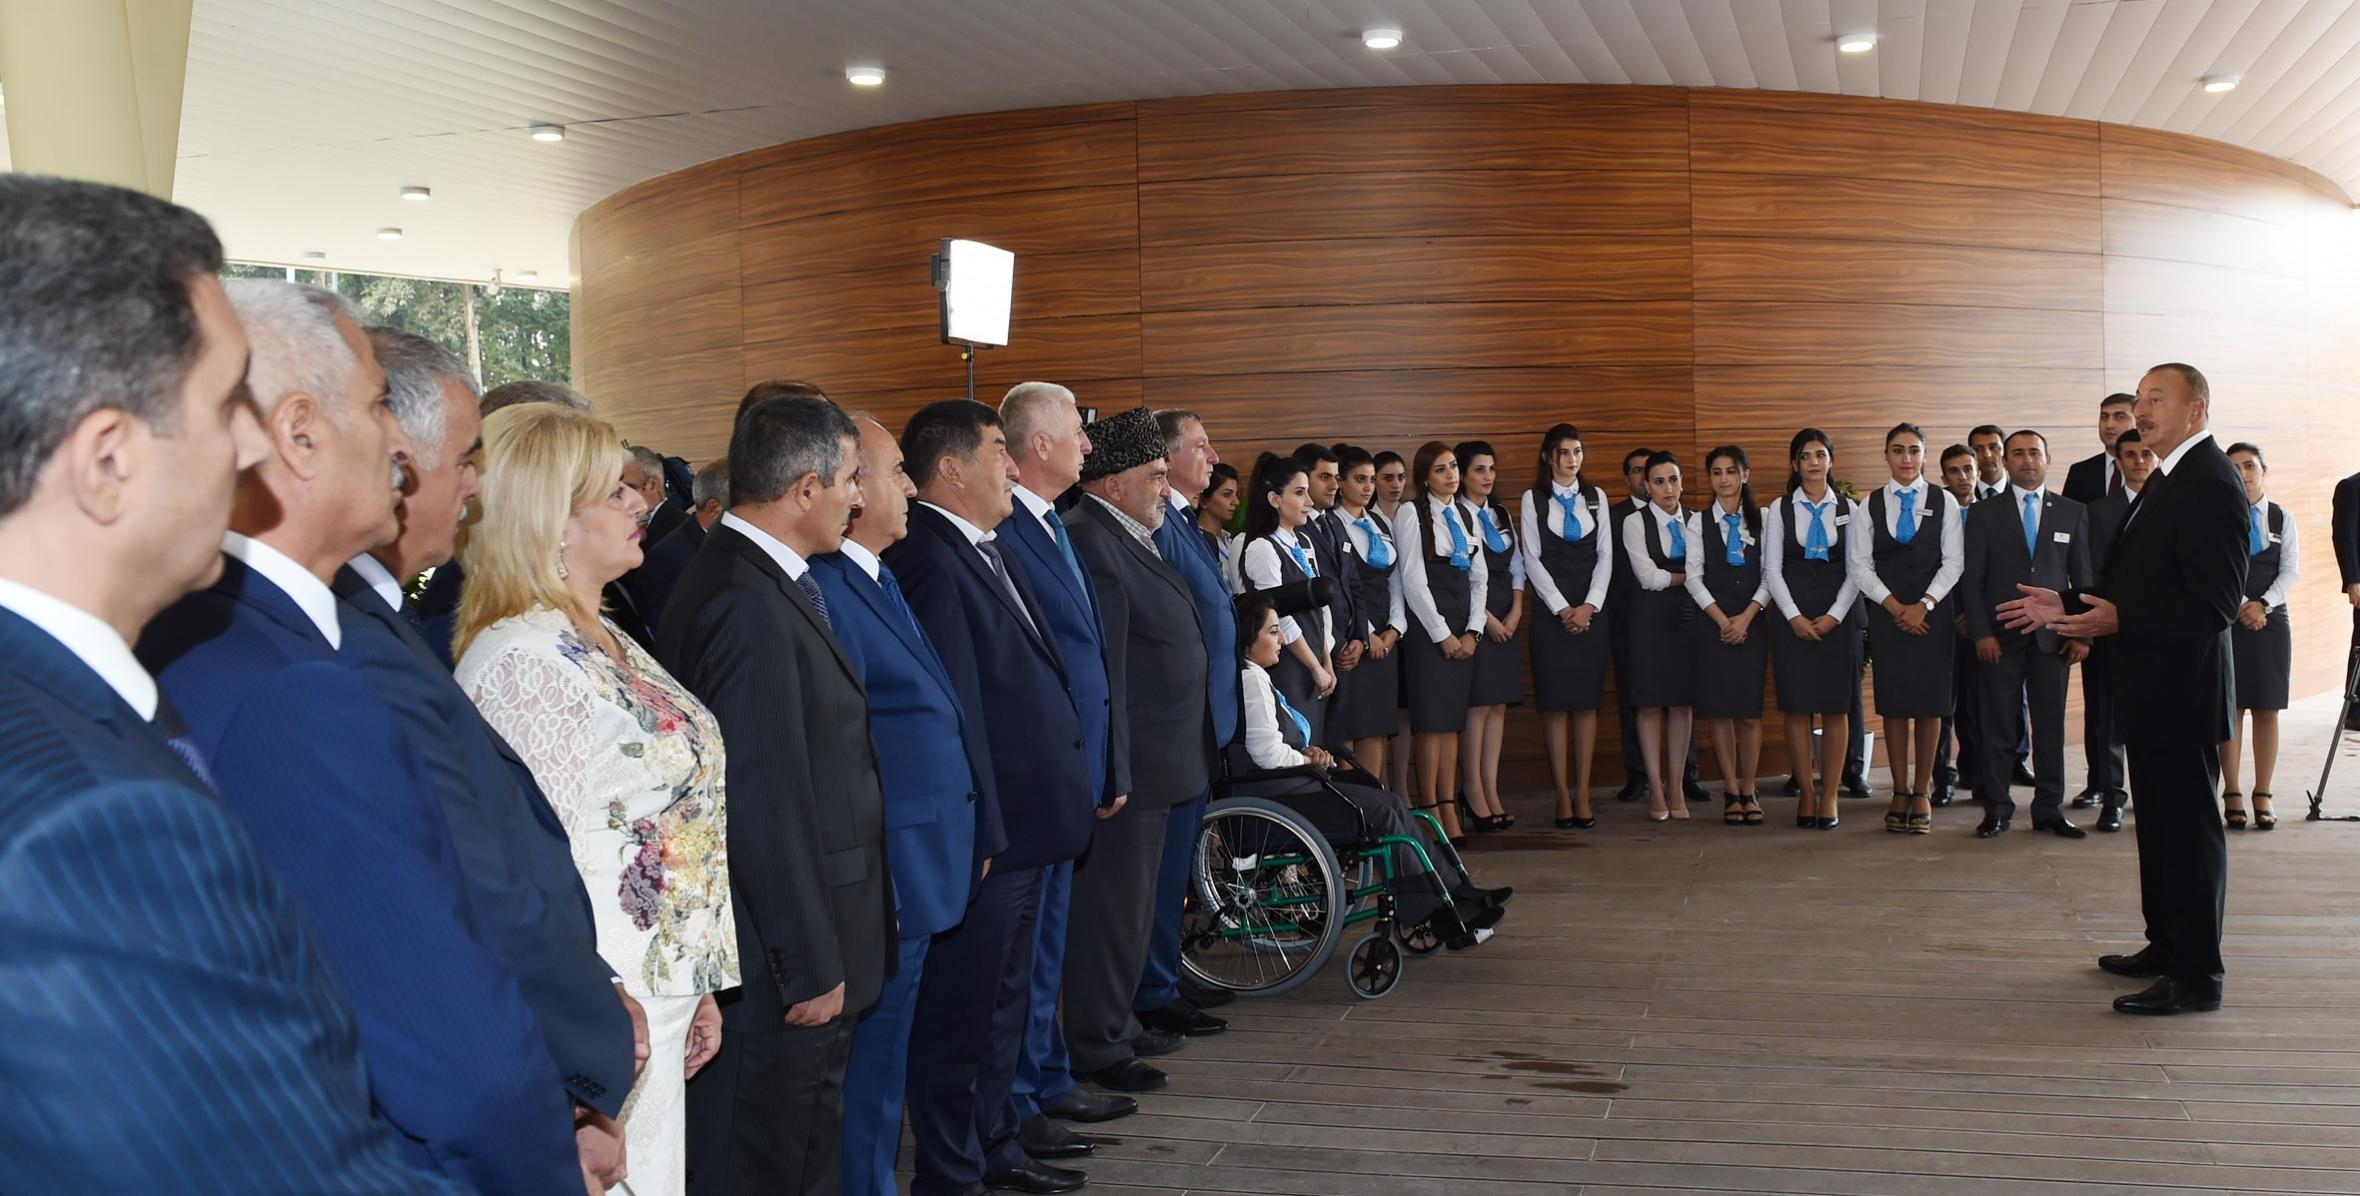 Speech by Ilham Aliyev at the opening of “ASAN hayat” complex in Masalli